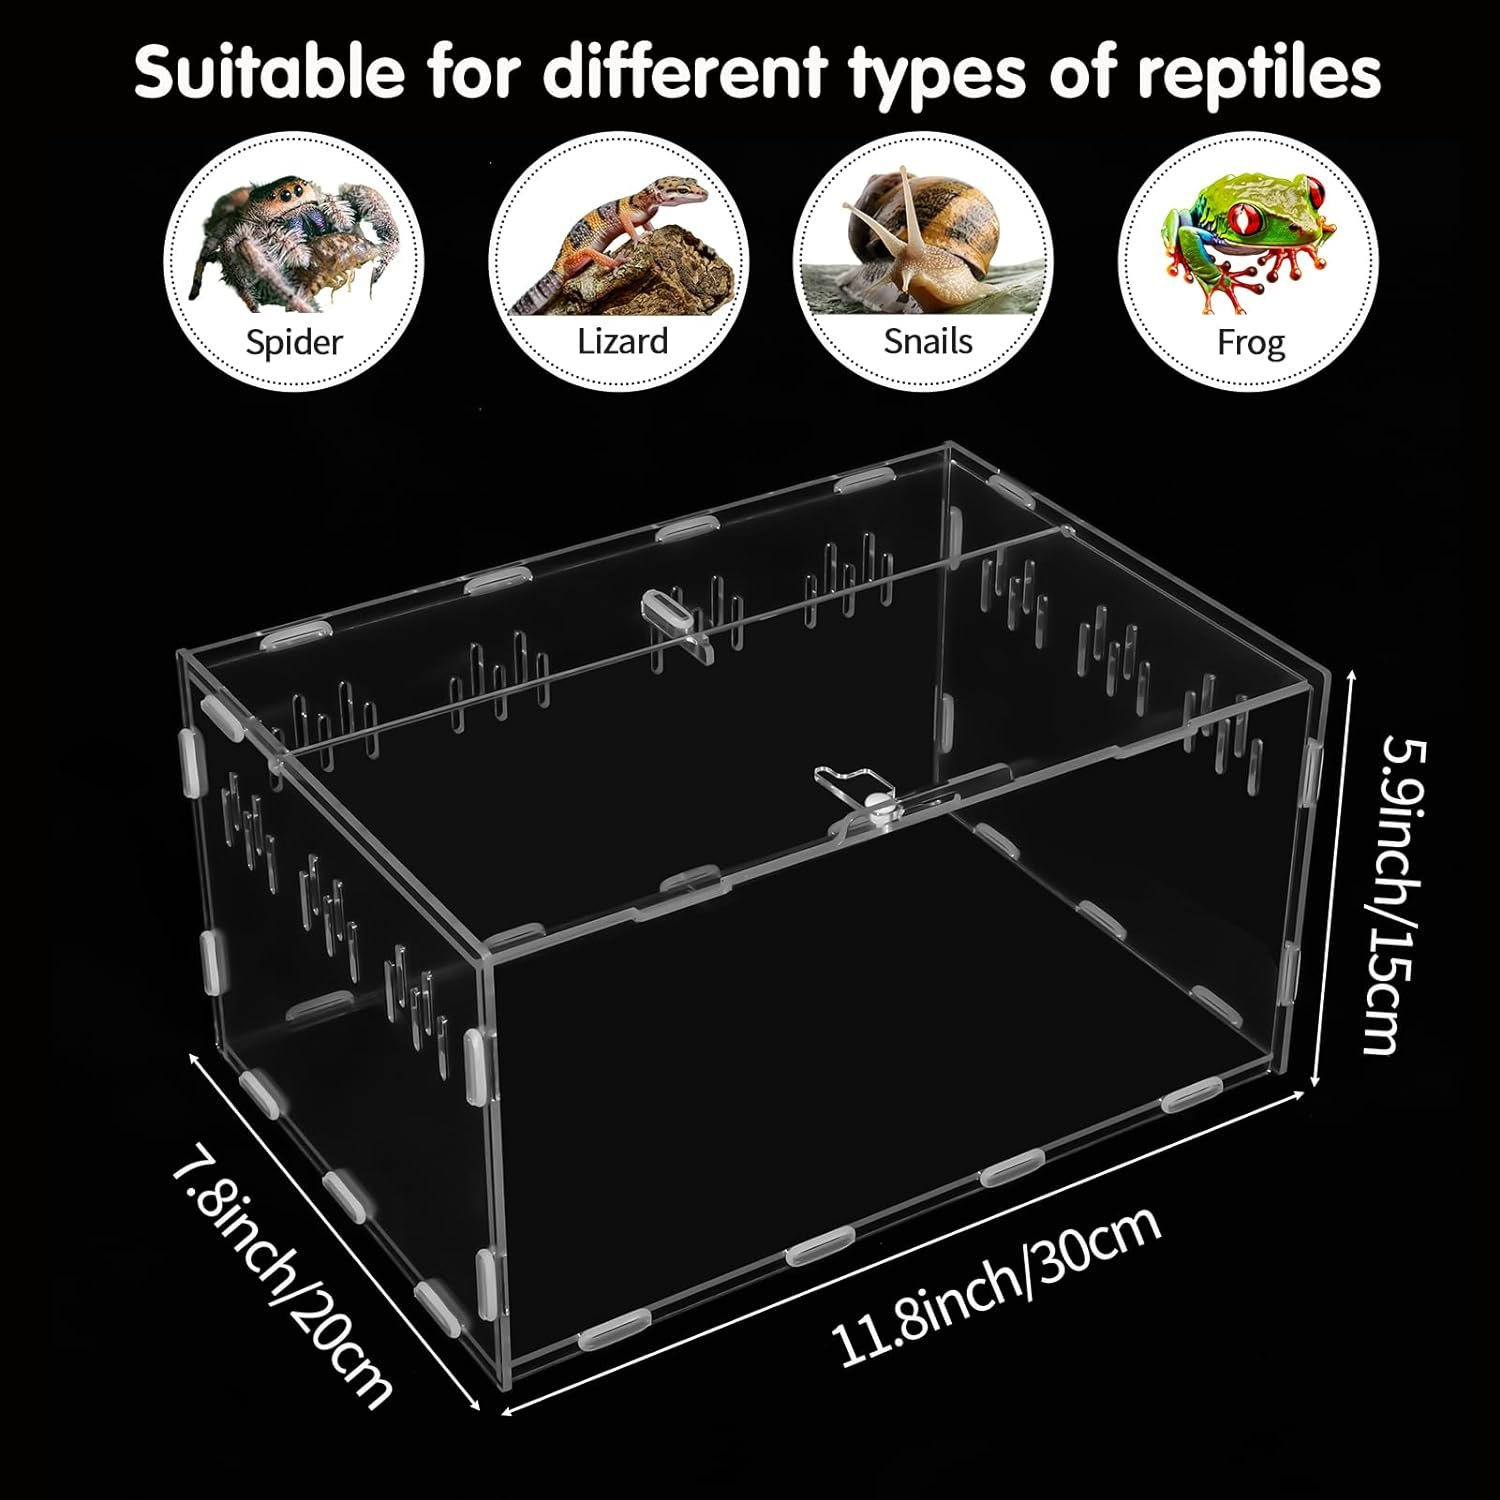 FRIUSATE Acrylic Reptile Terrarium Enclosure Transparent Reptile Tank Breeding Box Habitat for Small Reptiles Invertebrates Lizard Turtle Mantis Spider Cricket Tarantula Insects, 11.8x7.9x5.9 Inch